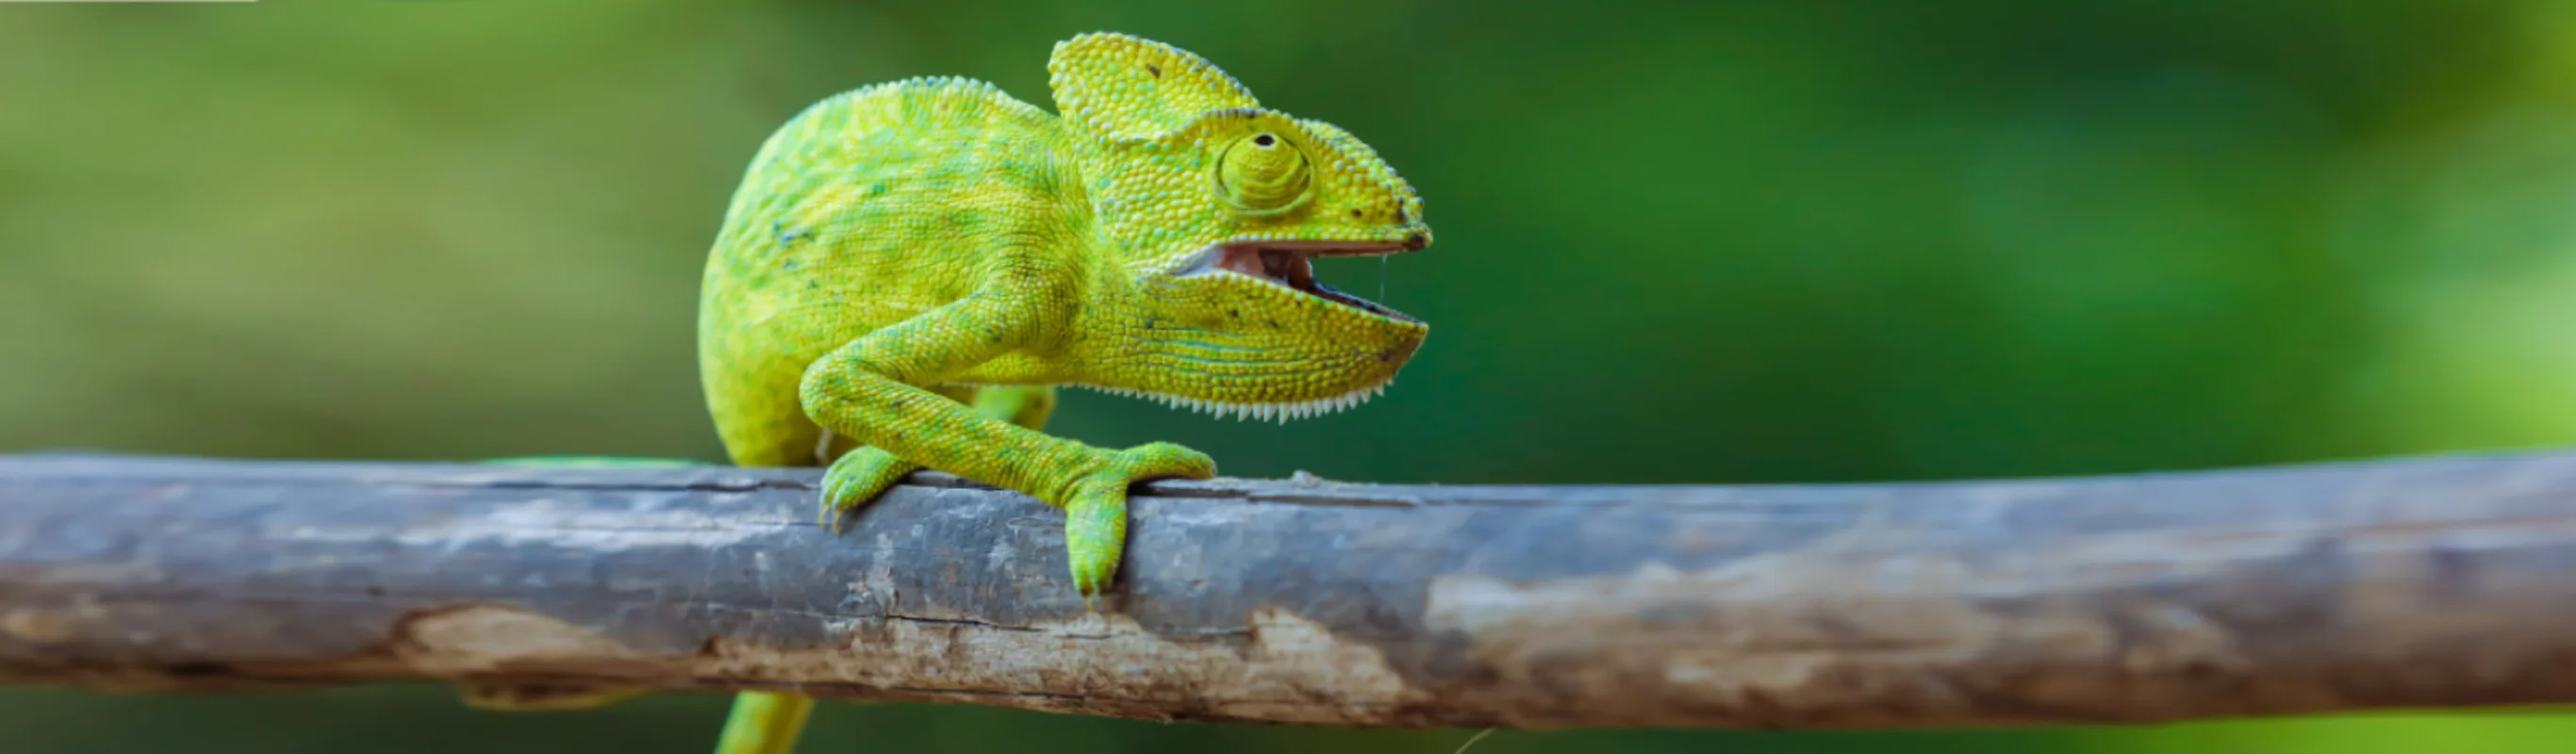 Green Chameleon on a Branch